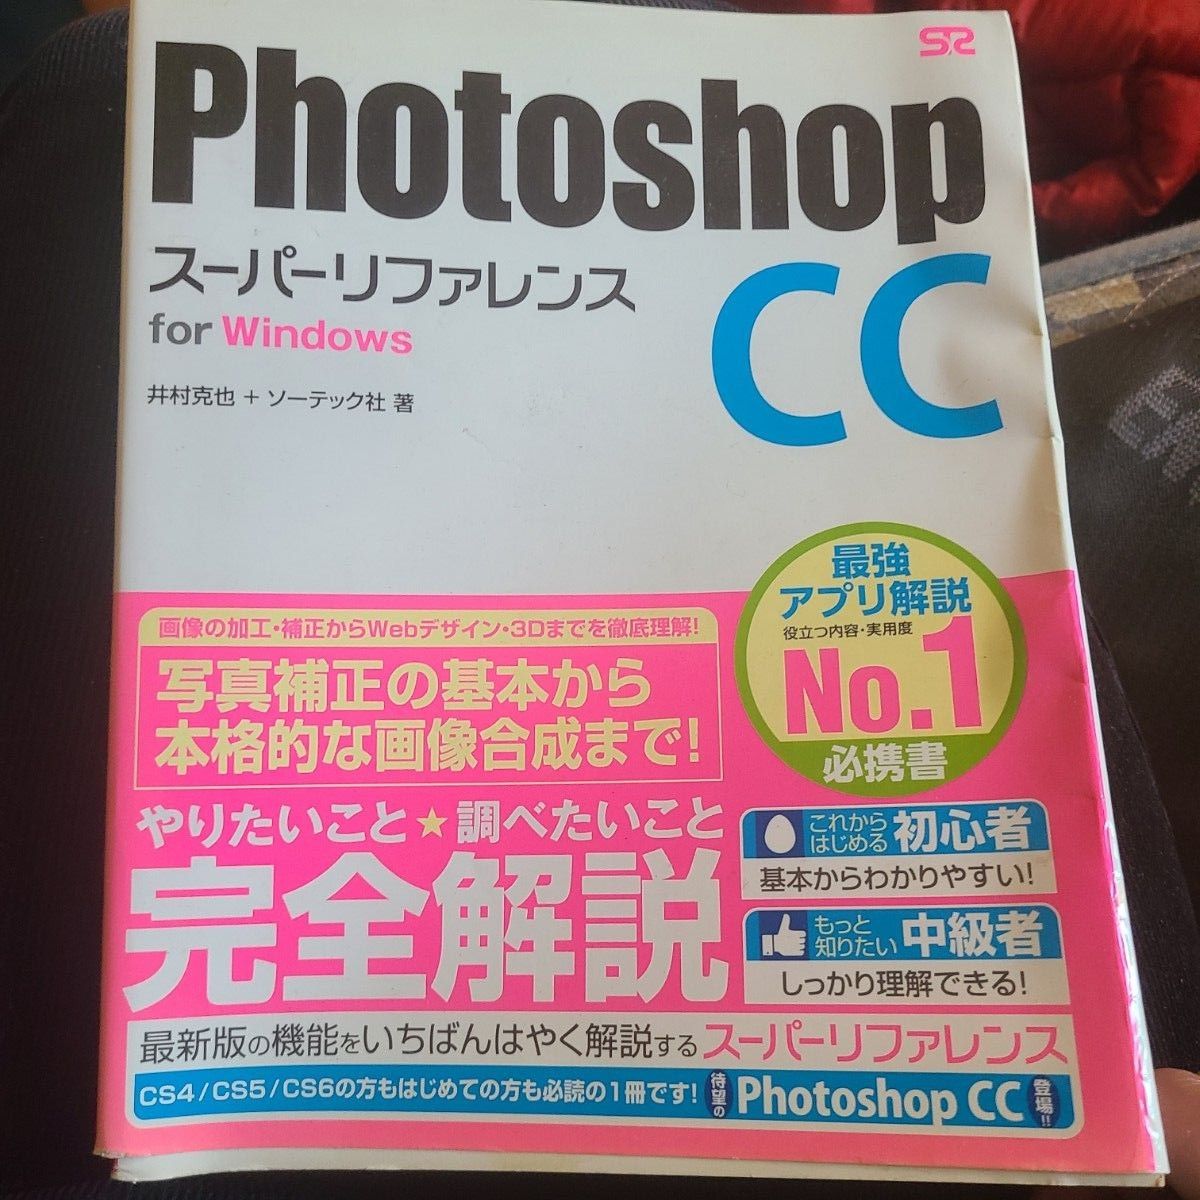 Photoshop CC スーパーリファレンス for Windows